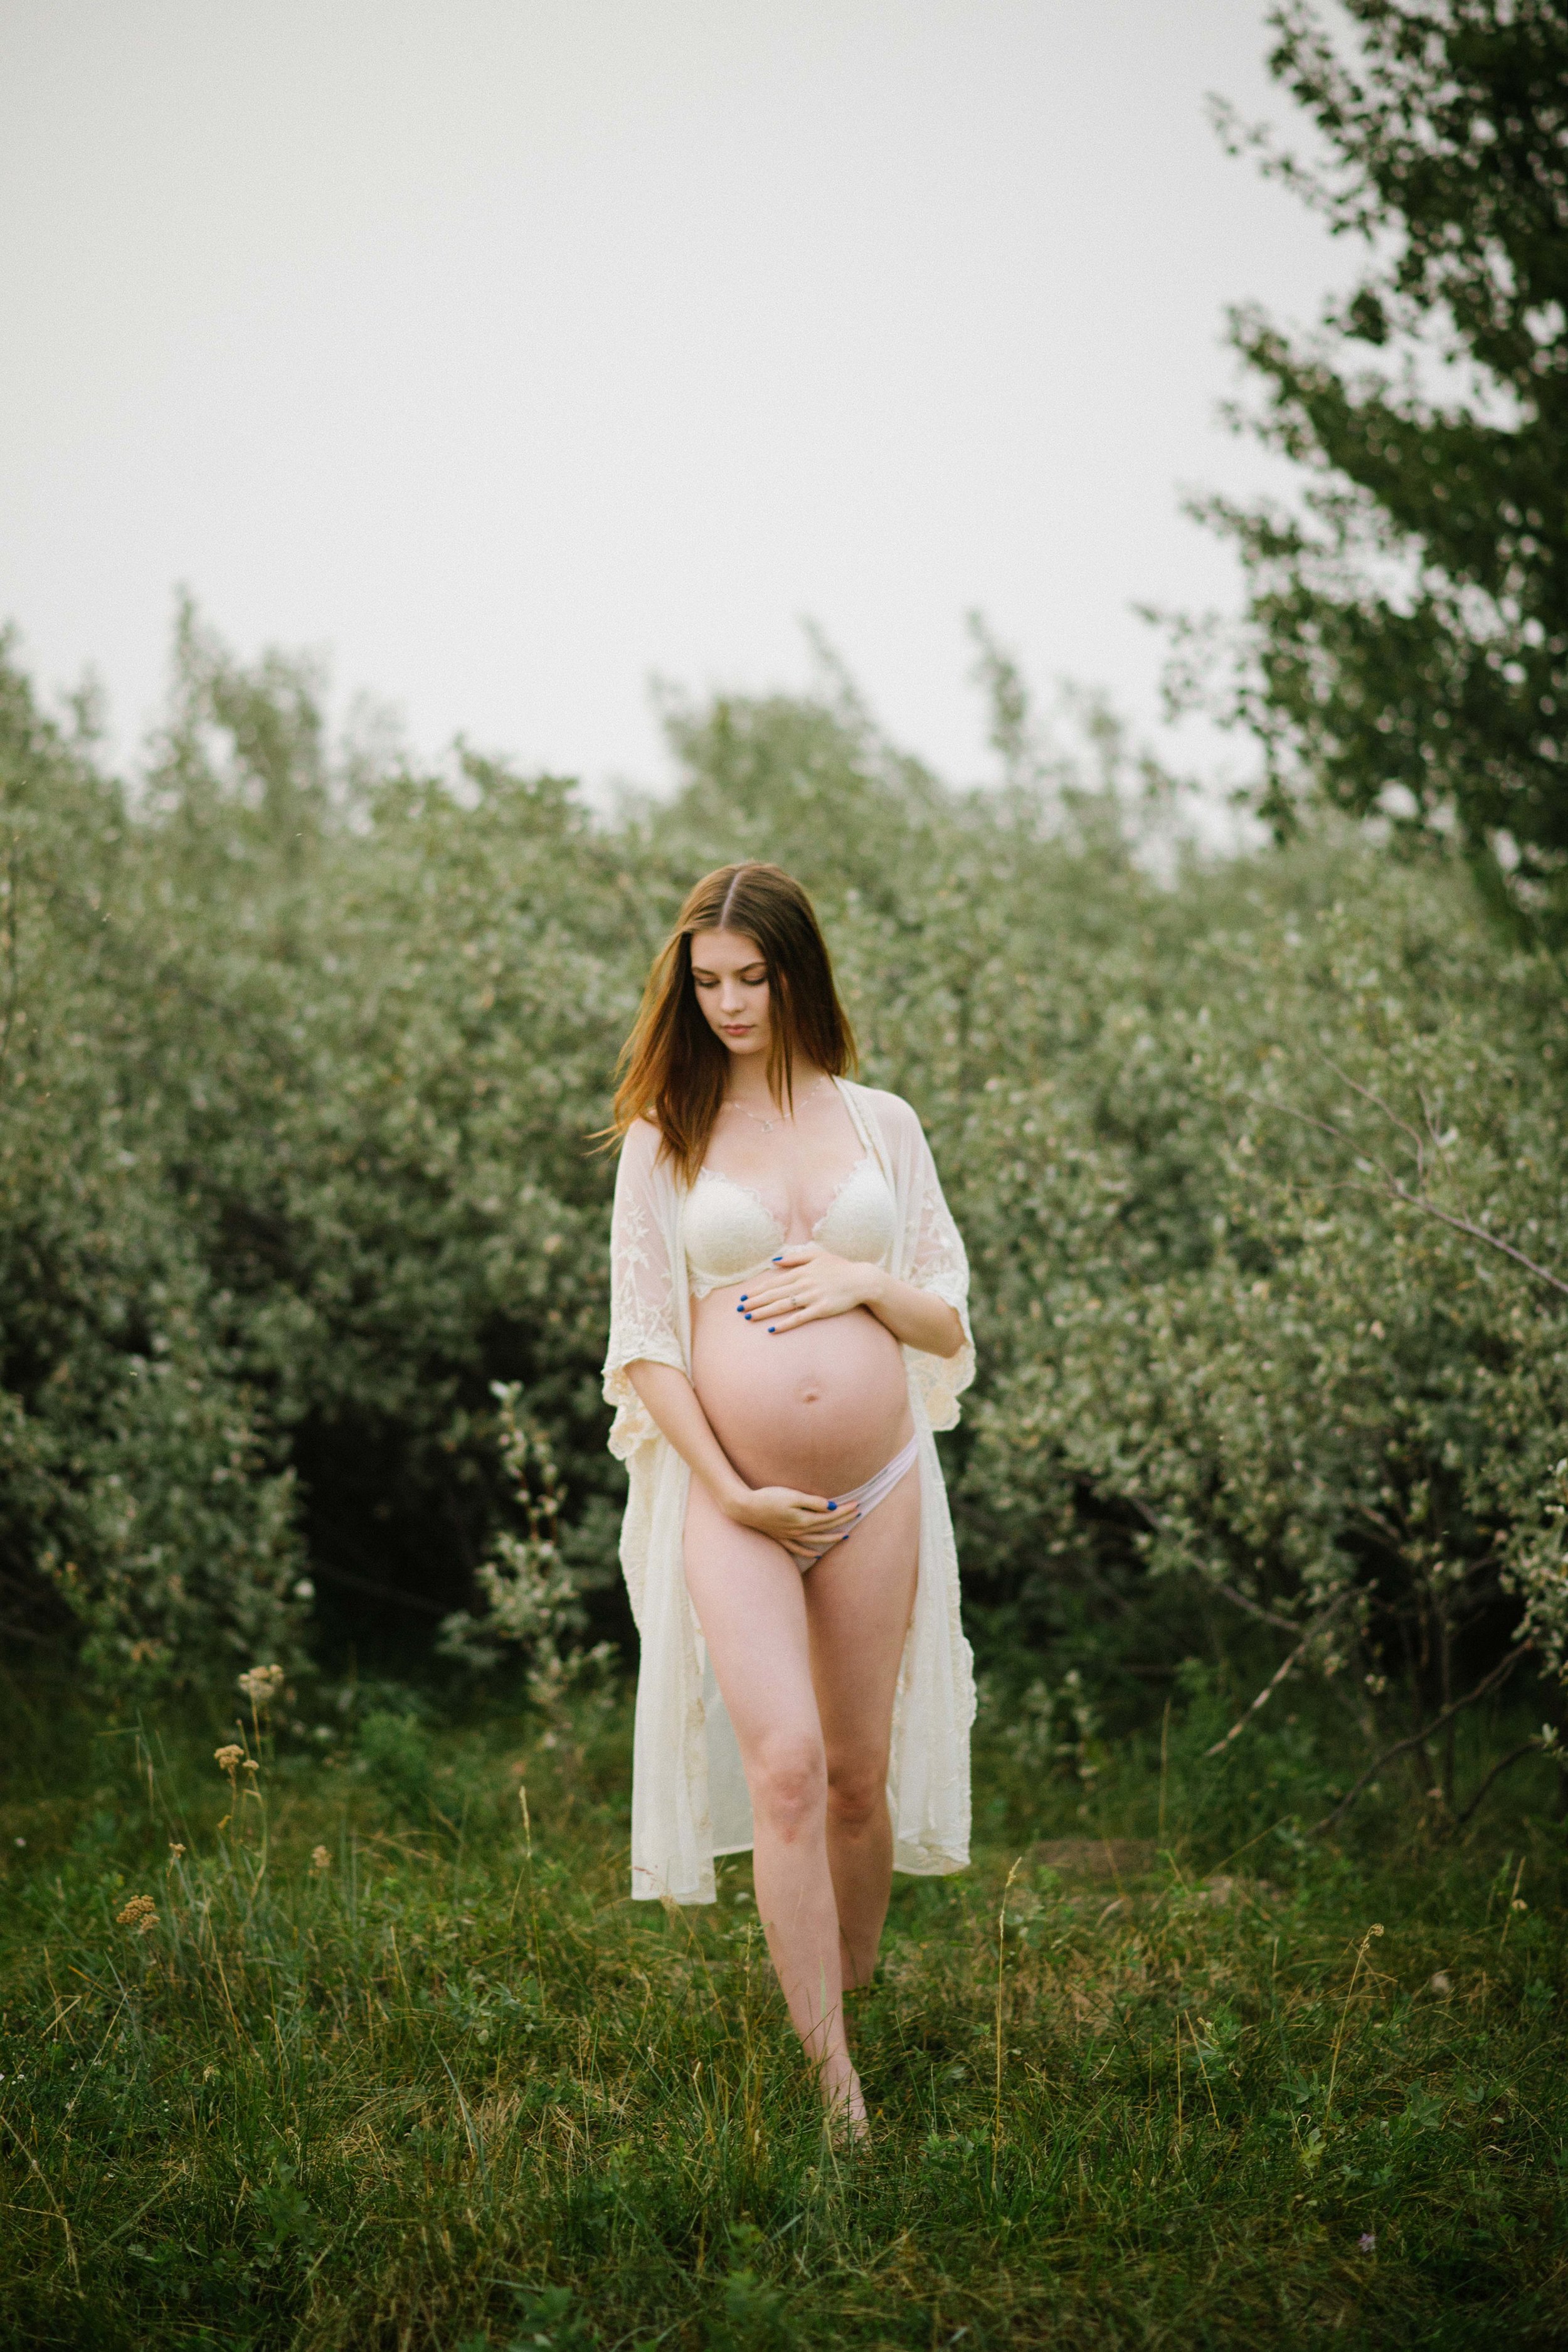 Christy-D-Swanberg-Photography-Calgary-maternity-lifestyle-portraits-family-baby-05.jpg